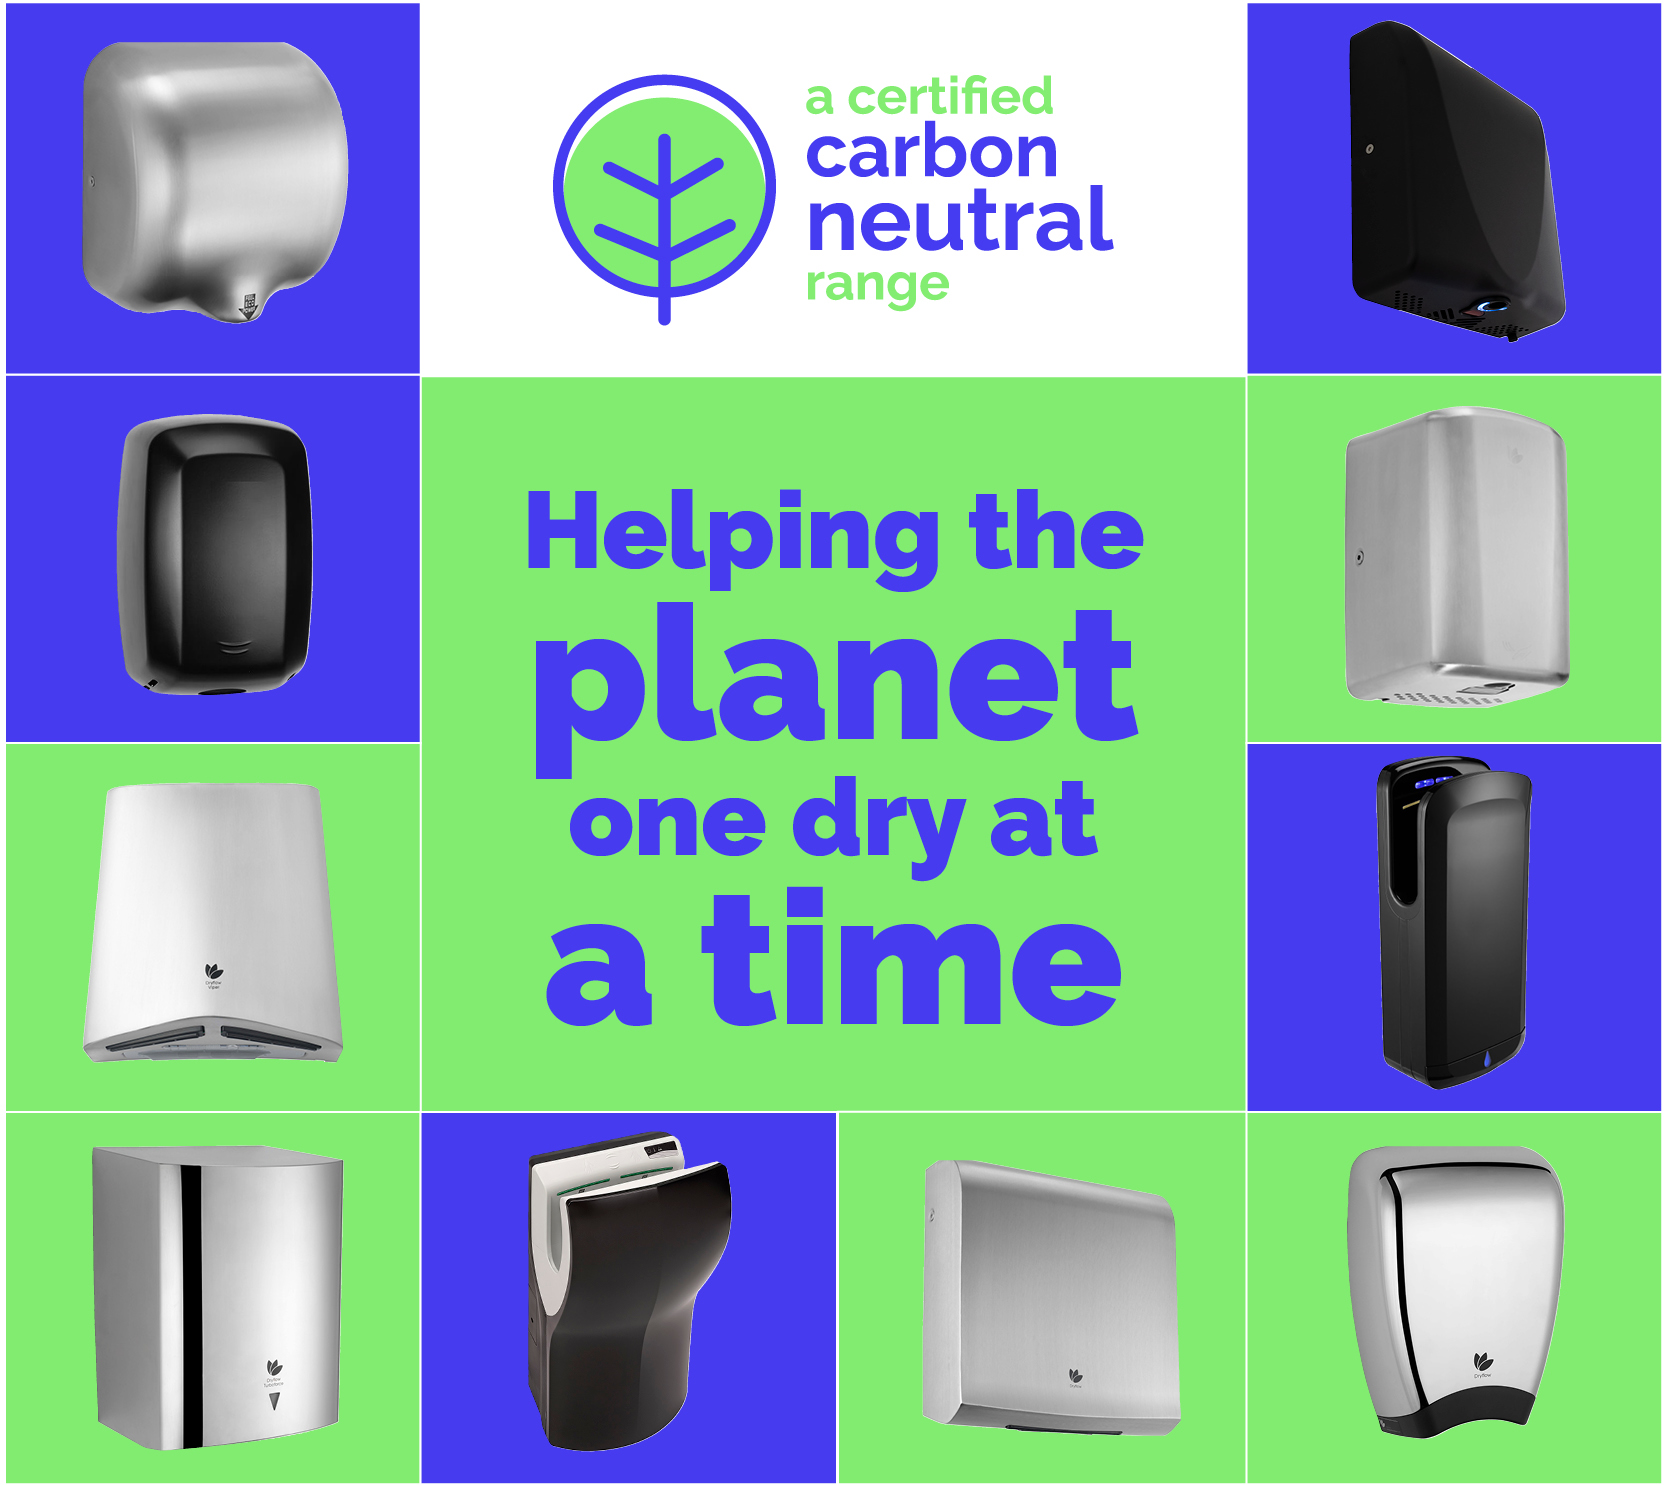 A certified carbon neutral range